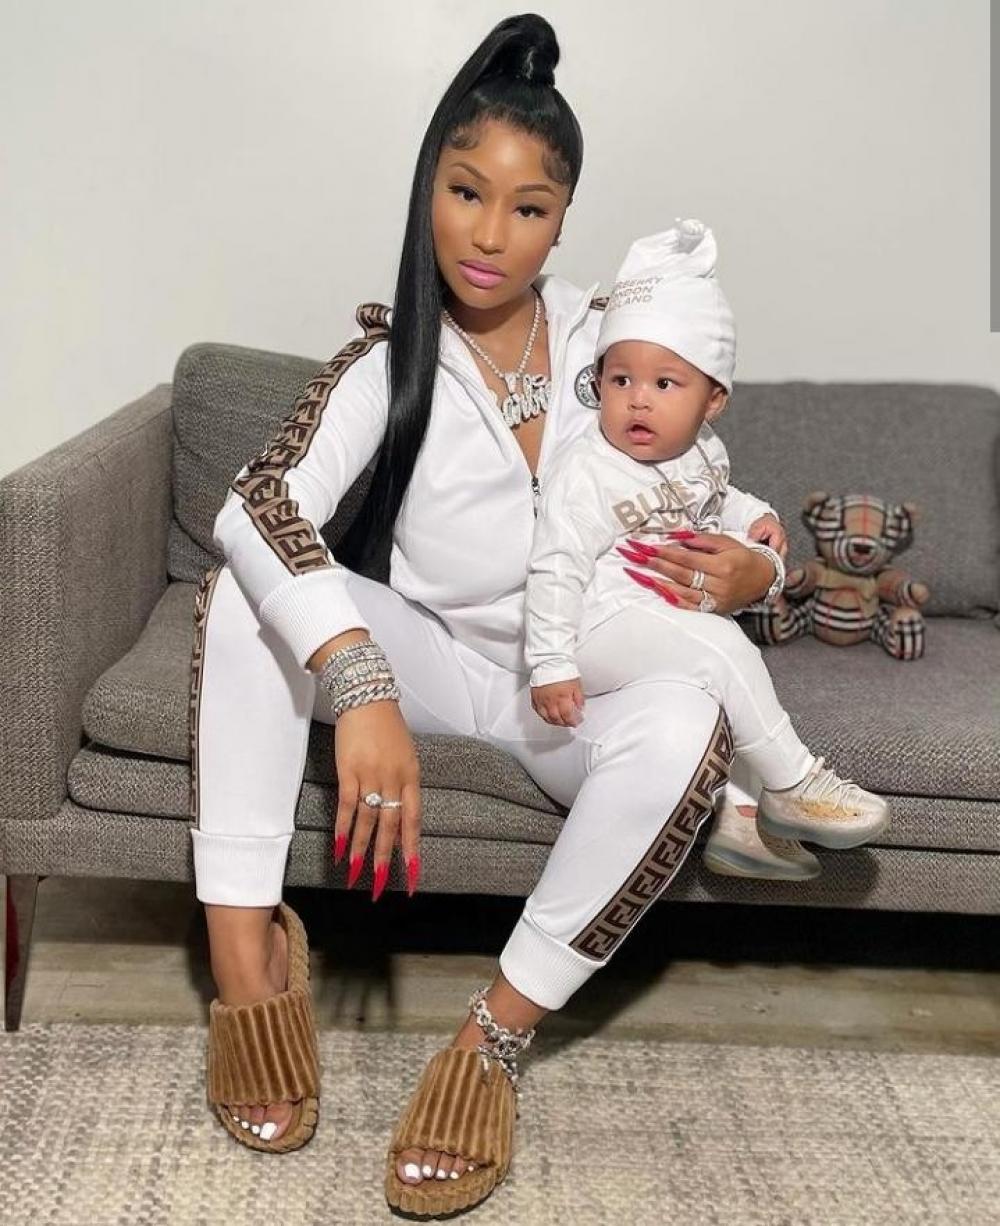 The Weekend Leader - Nicki Minaj, son twin in new photos on social media